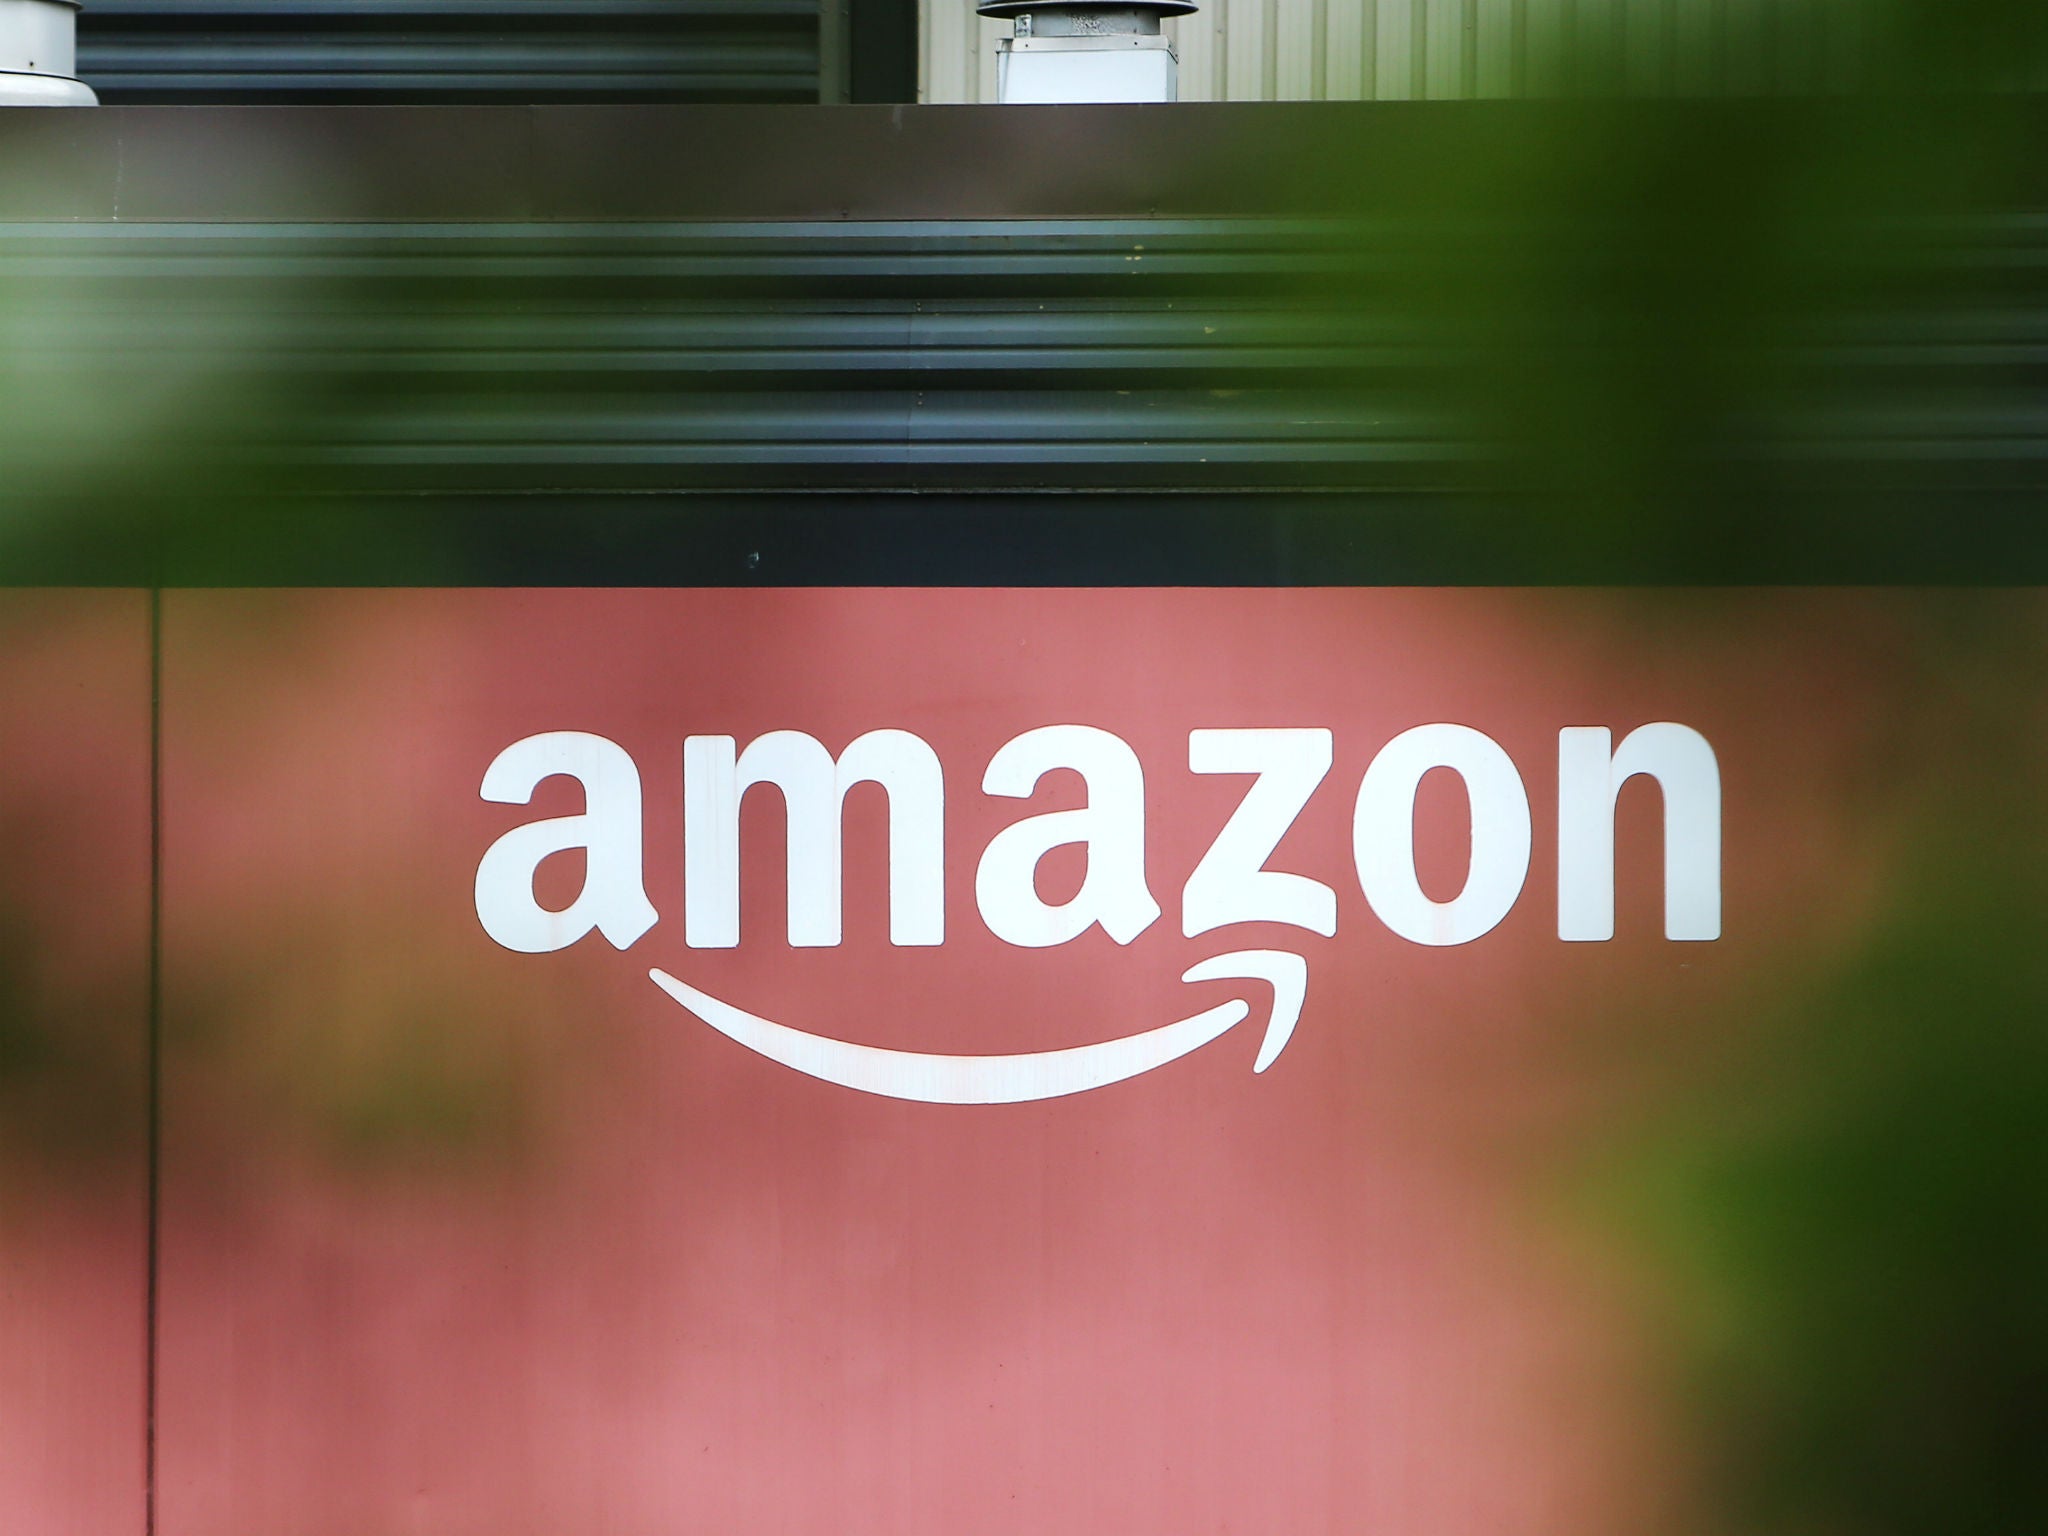 Donald Trump has repeatedly attacked Amazon